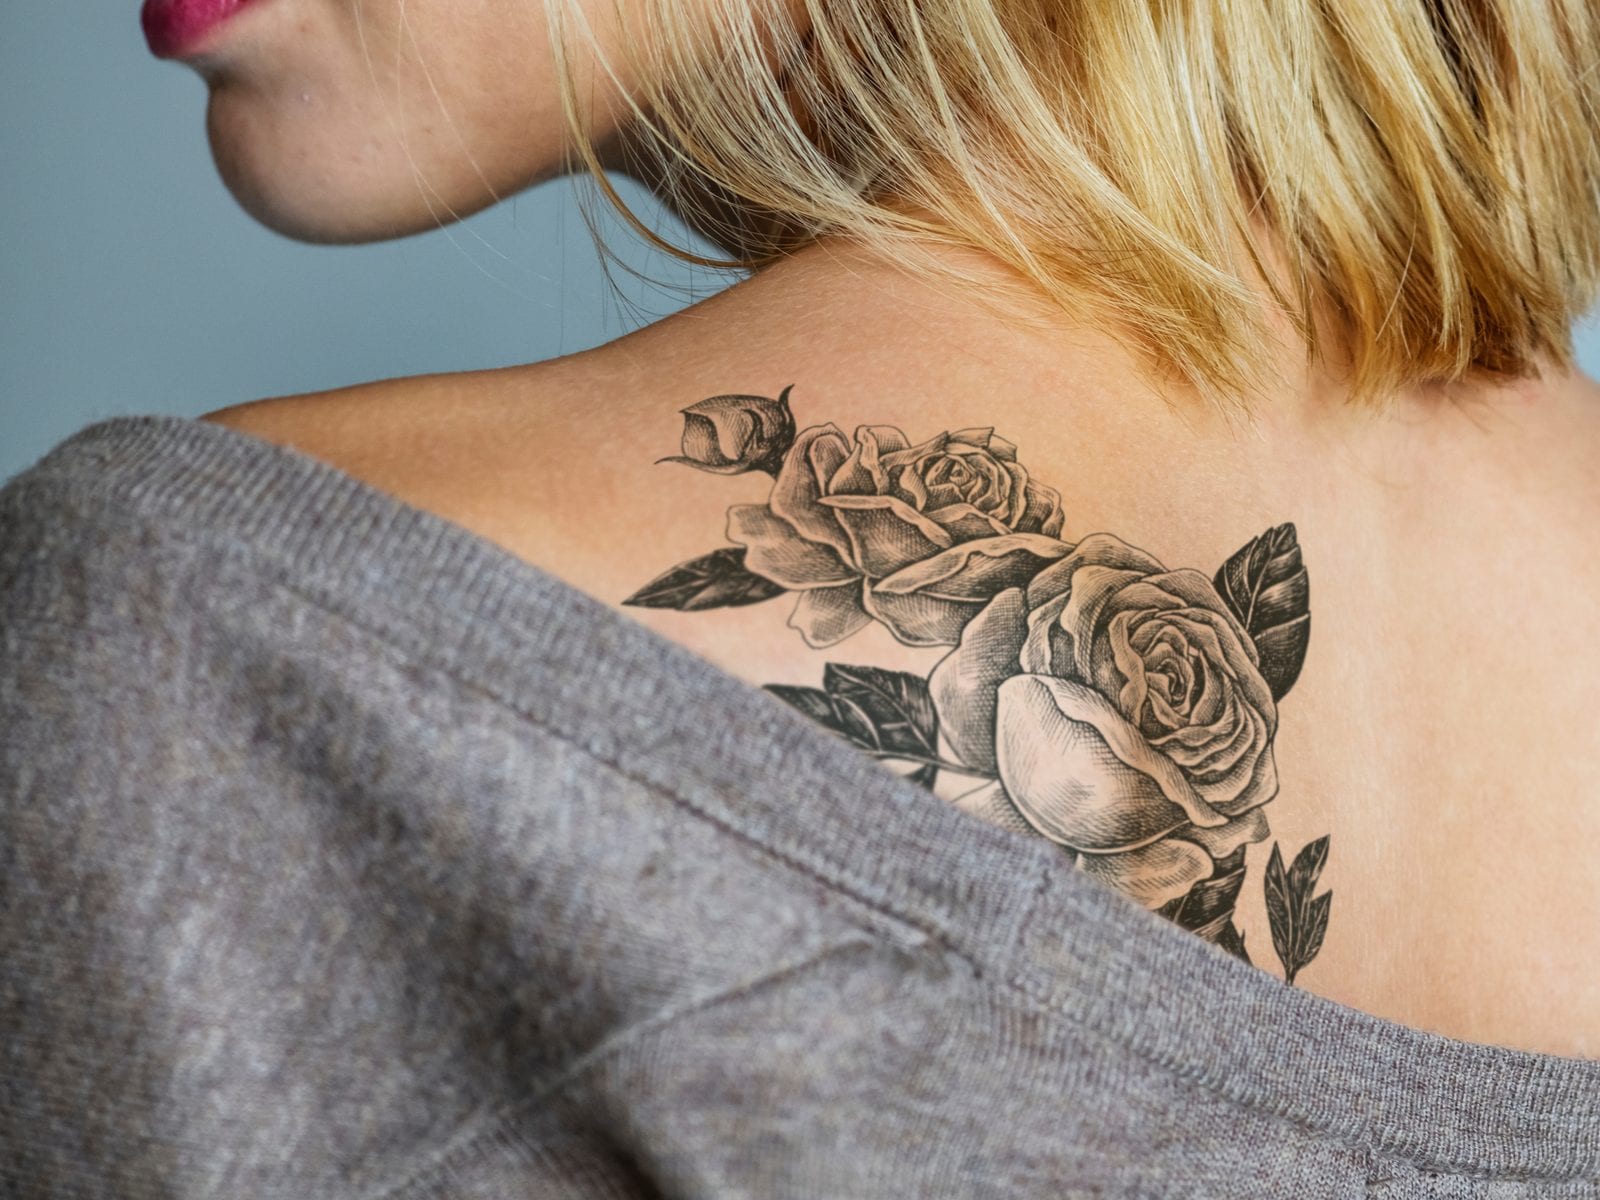 The Rise Of Micro Tattoos - TikTok's Favorite New Trend